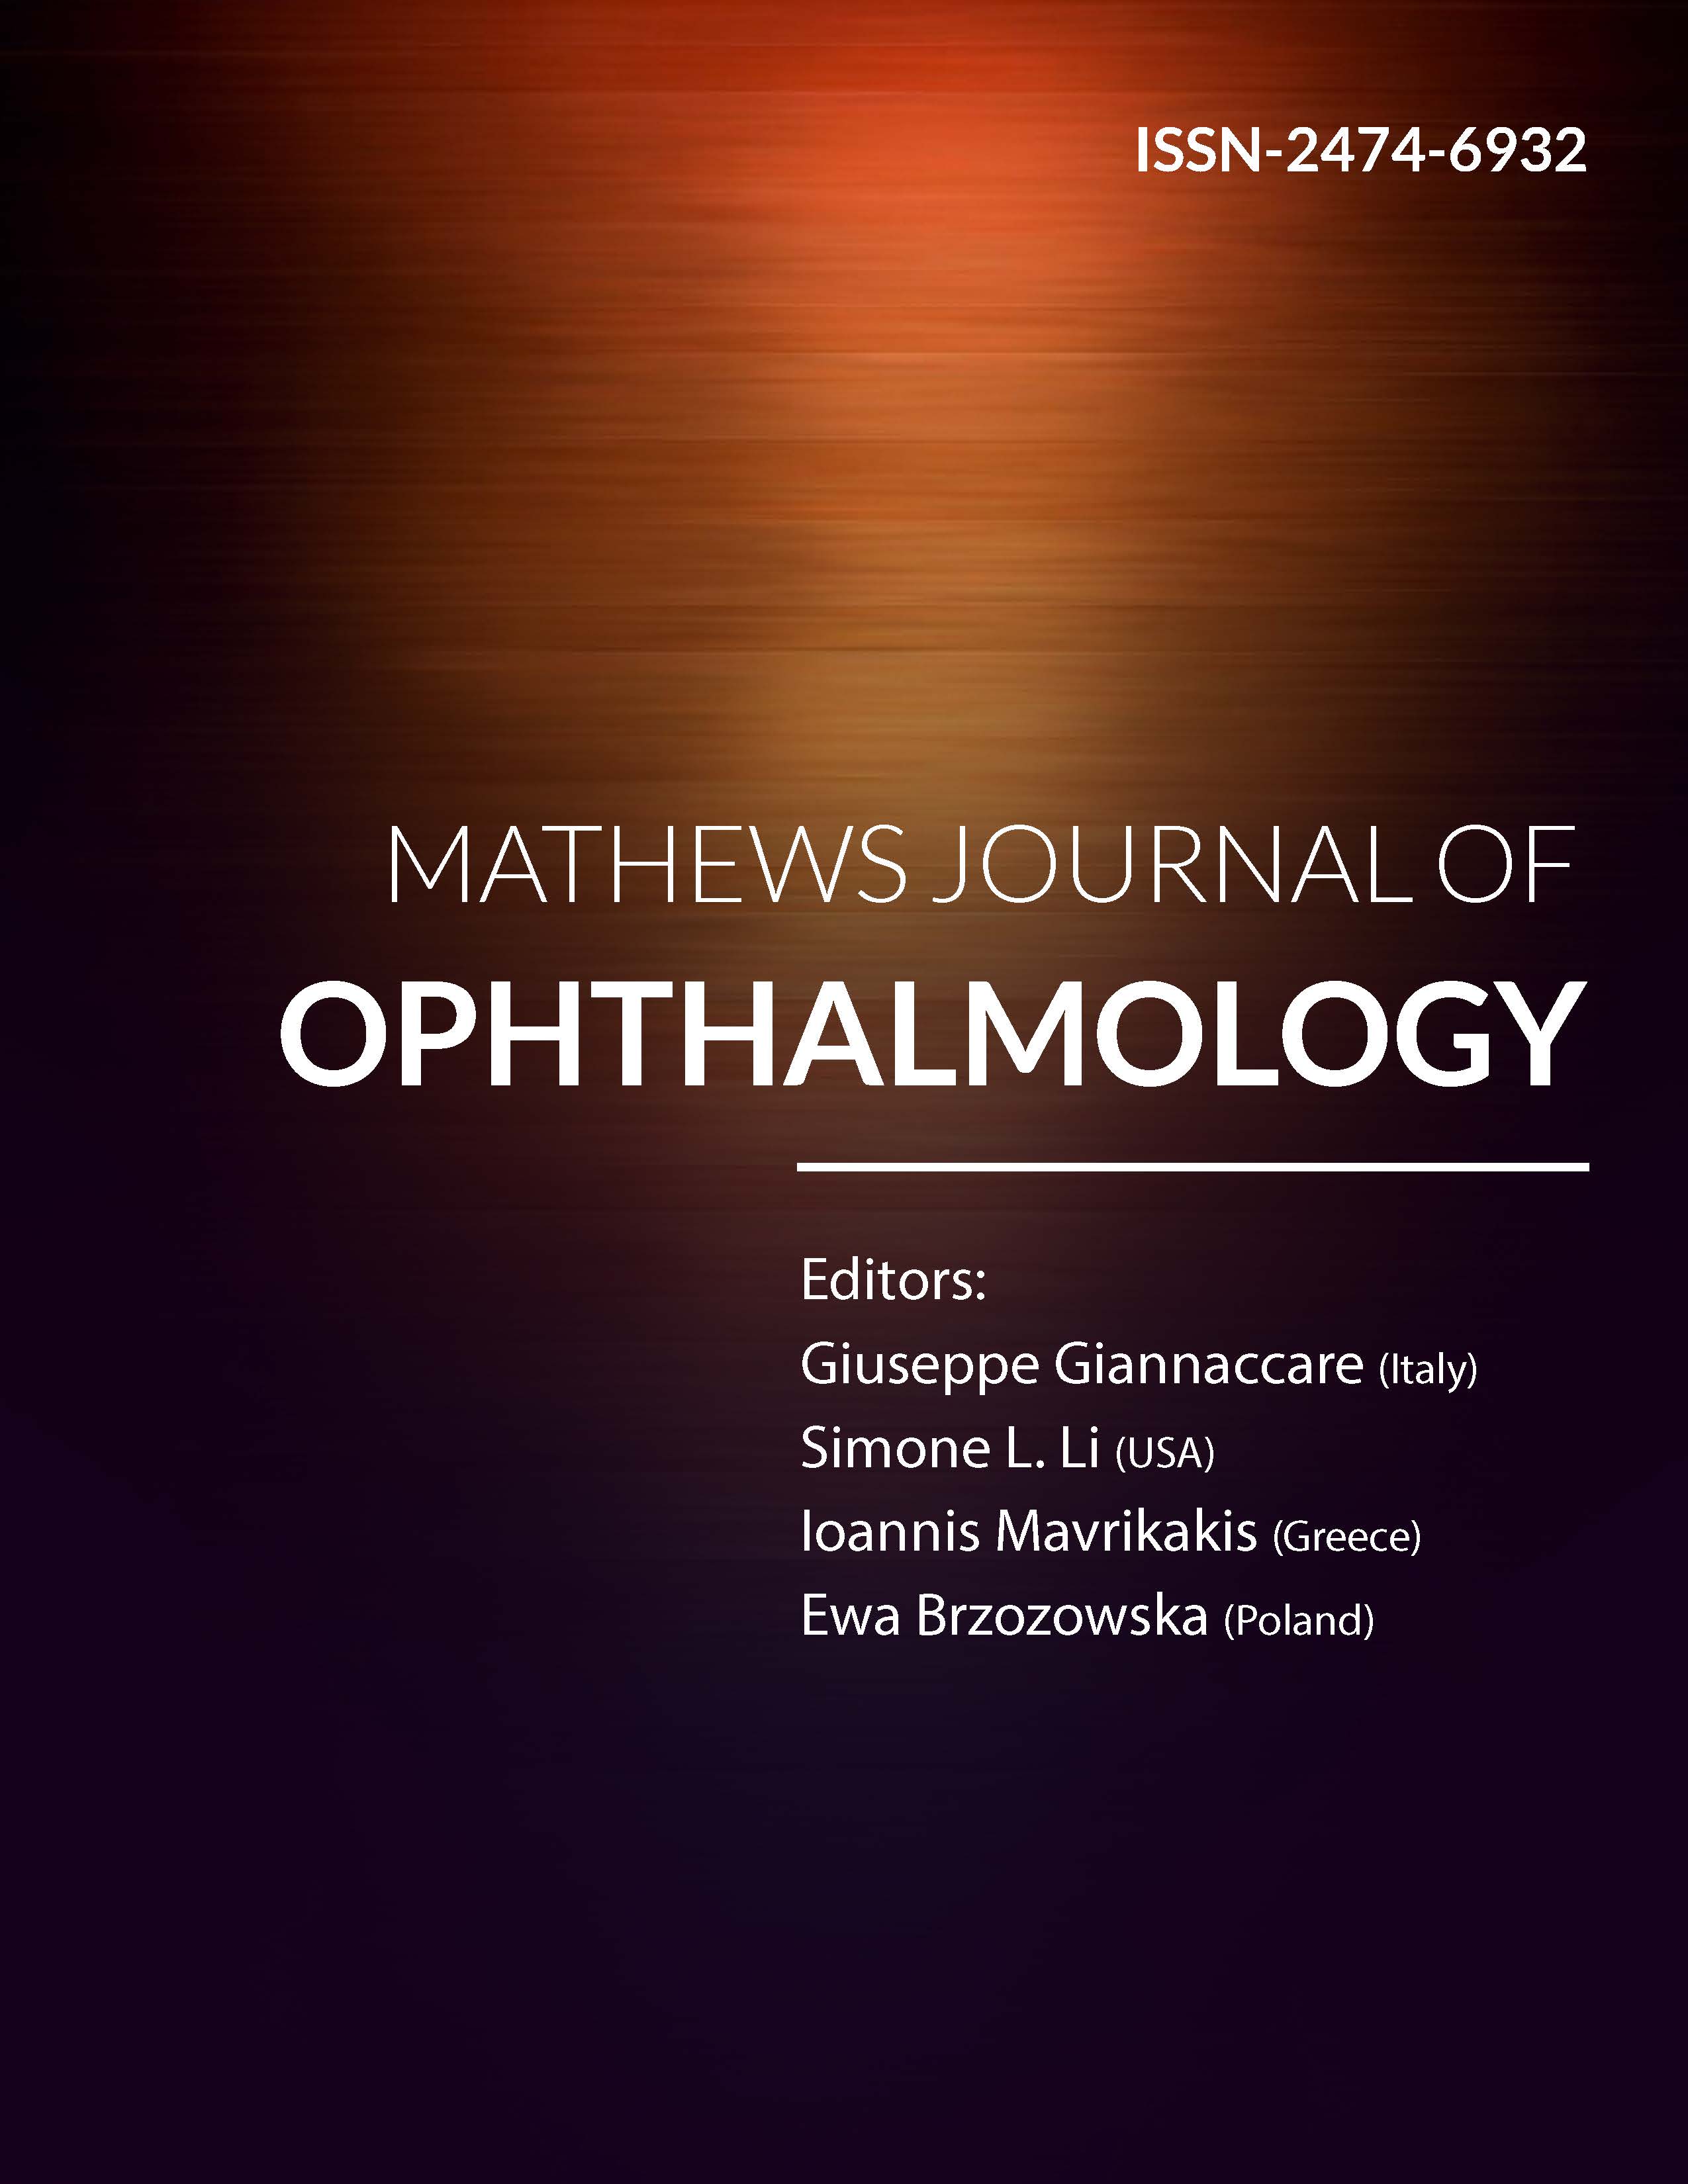 Mathews Journal of Opthalmology